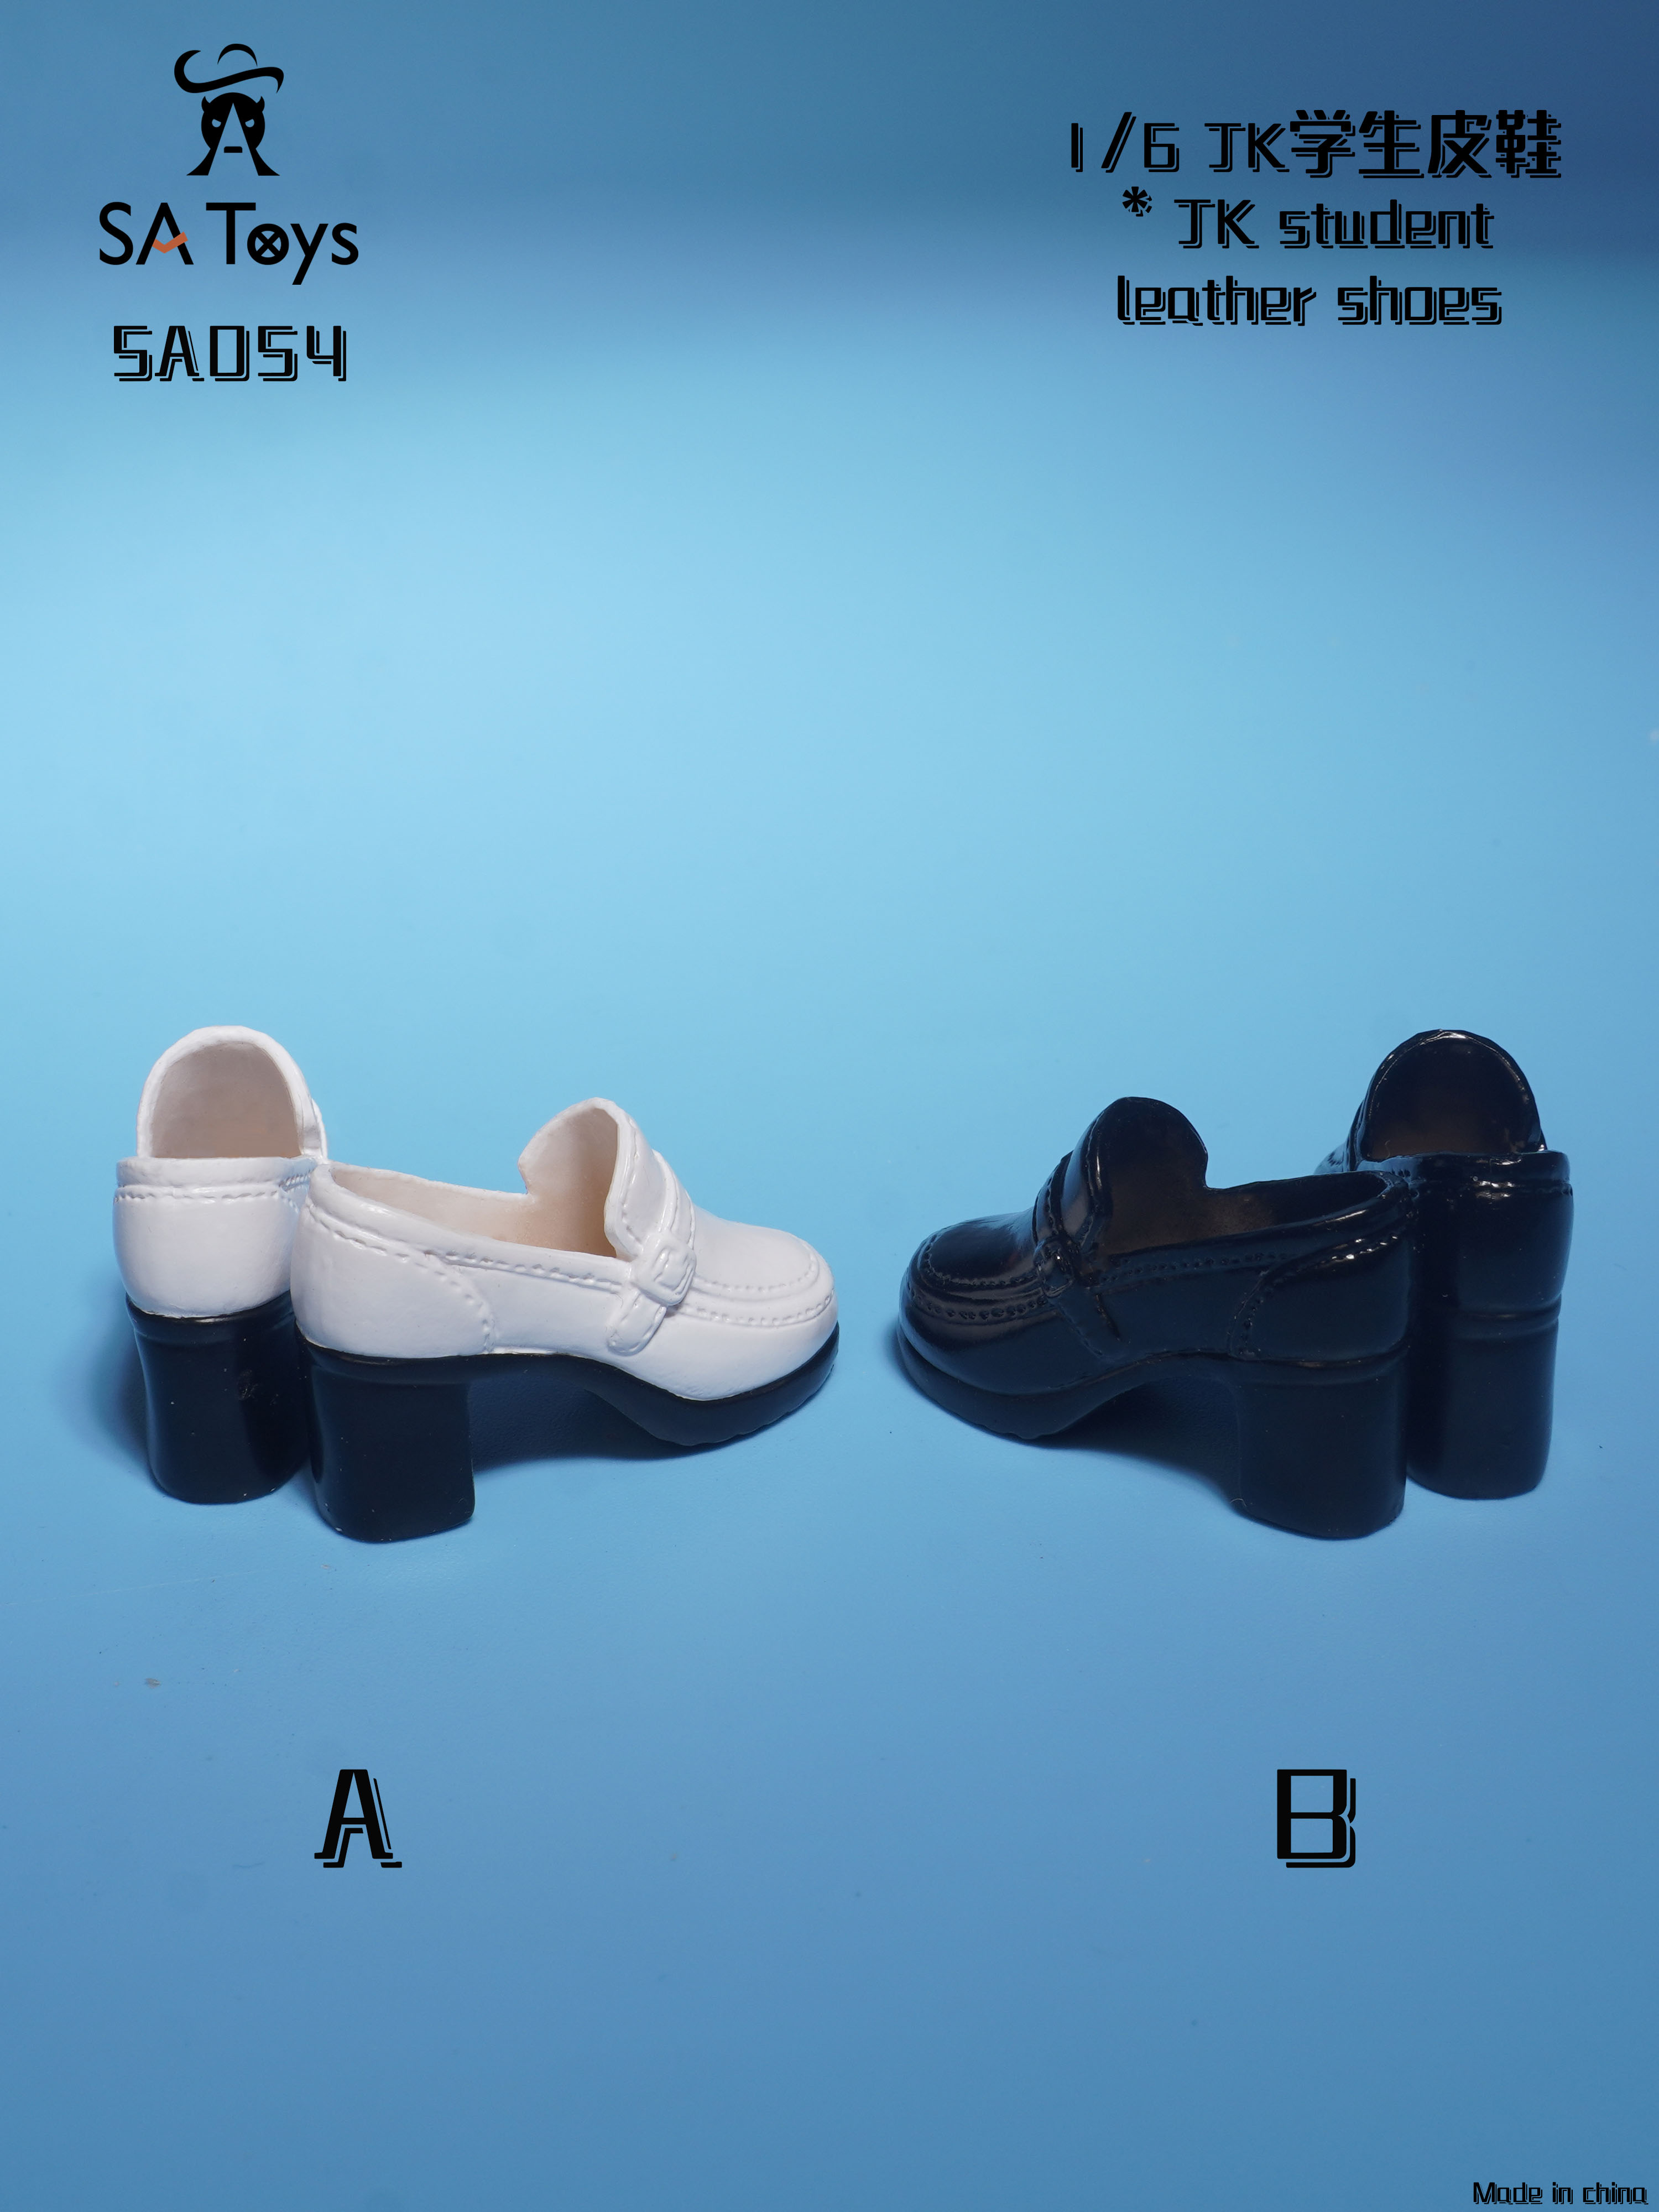 hollow - NEW PRODUCT: SA Toys - Hollow leather: shoes (SA009 A/B) / Mid tube boots (SA010 A/B) / student shoes (SA054 A/B) 02134